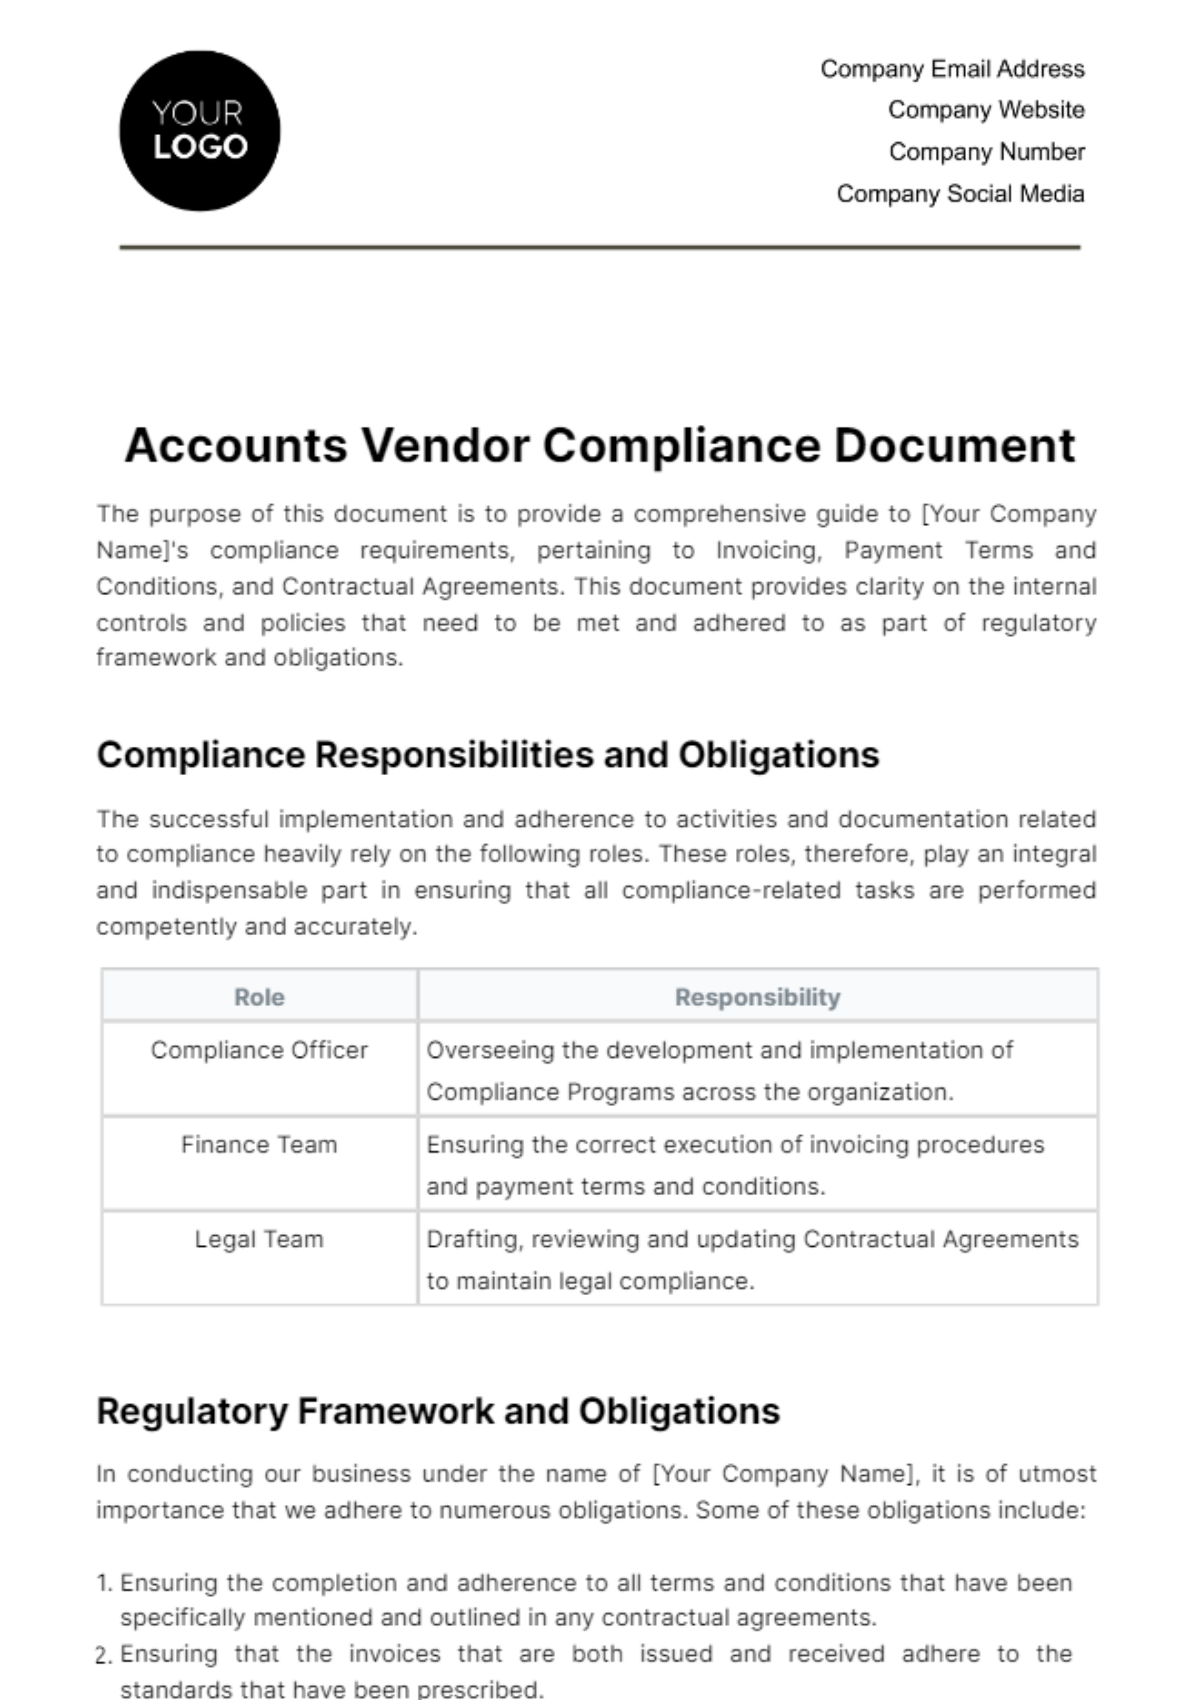 Accounts Vendor Compliance Document Template